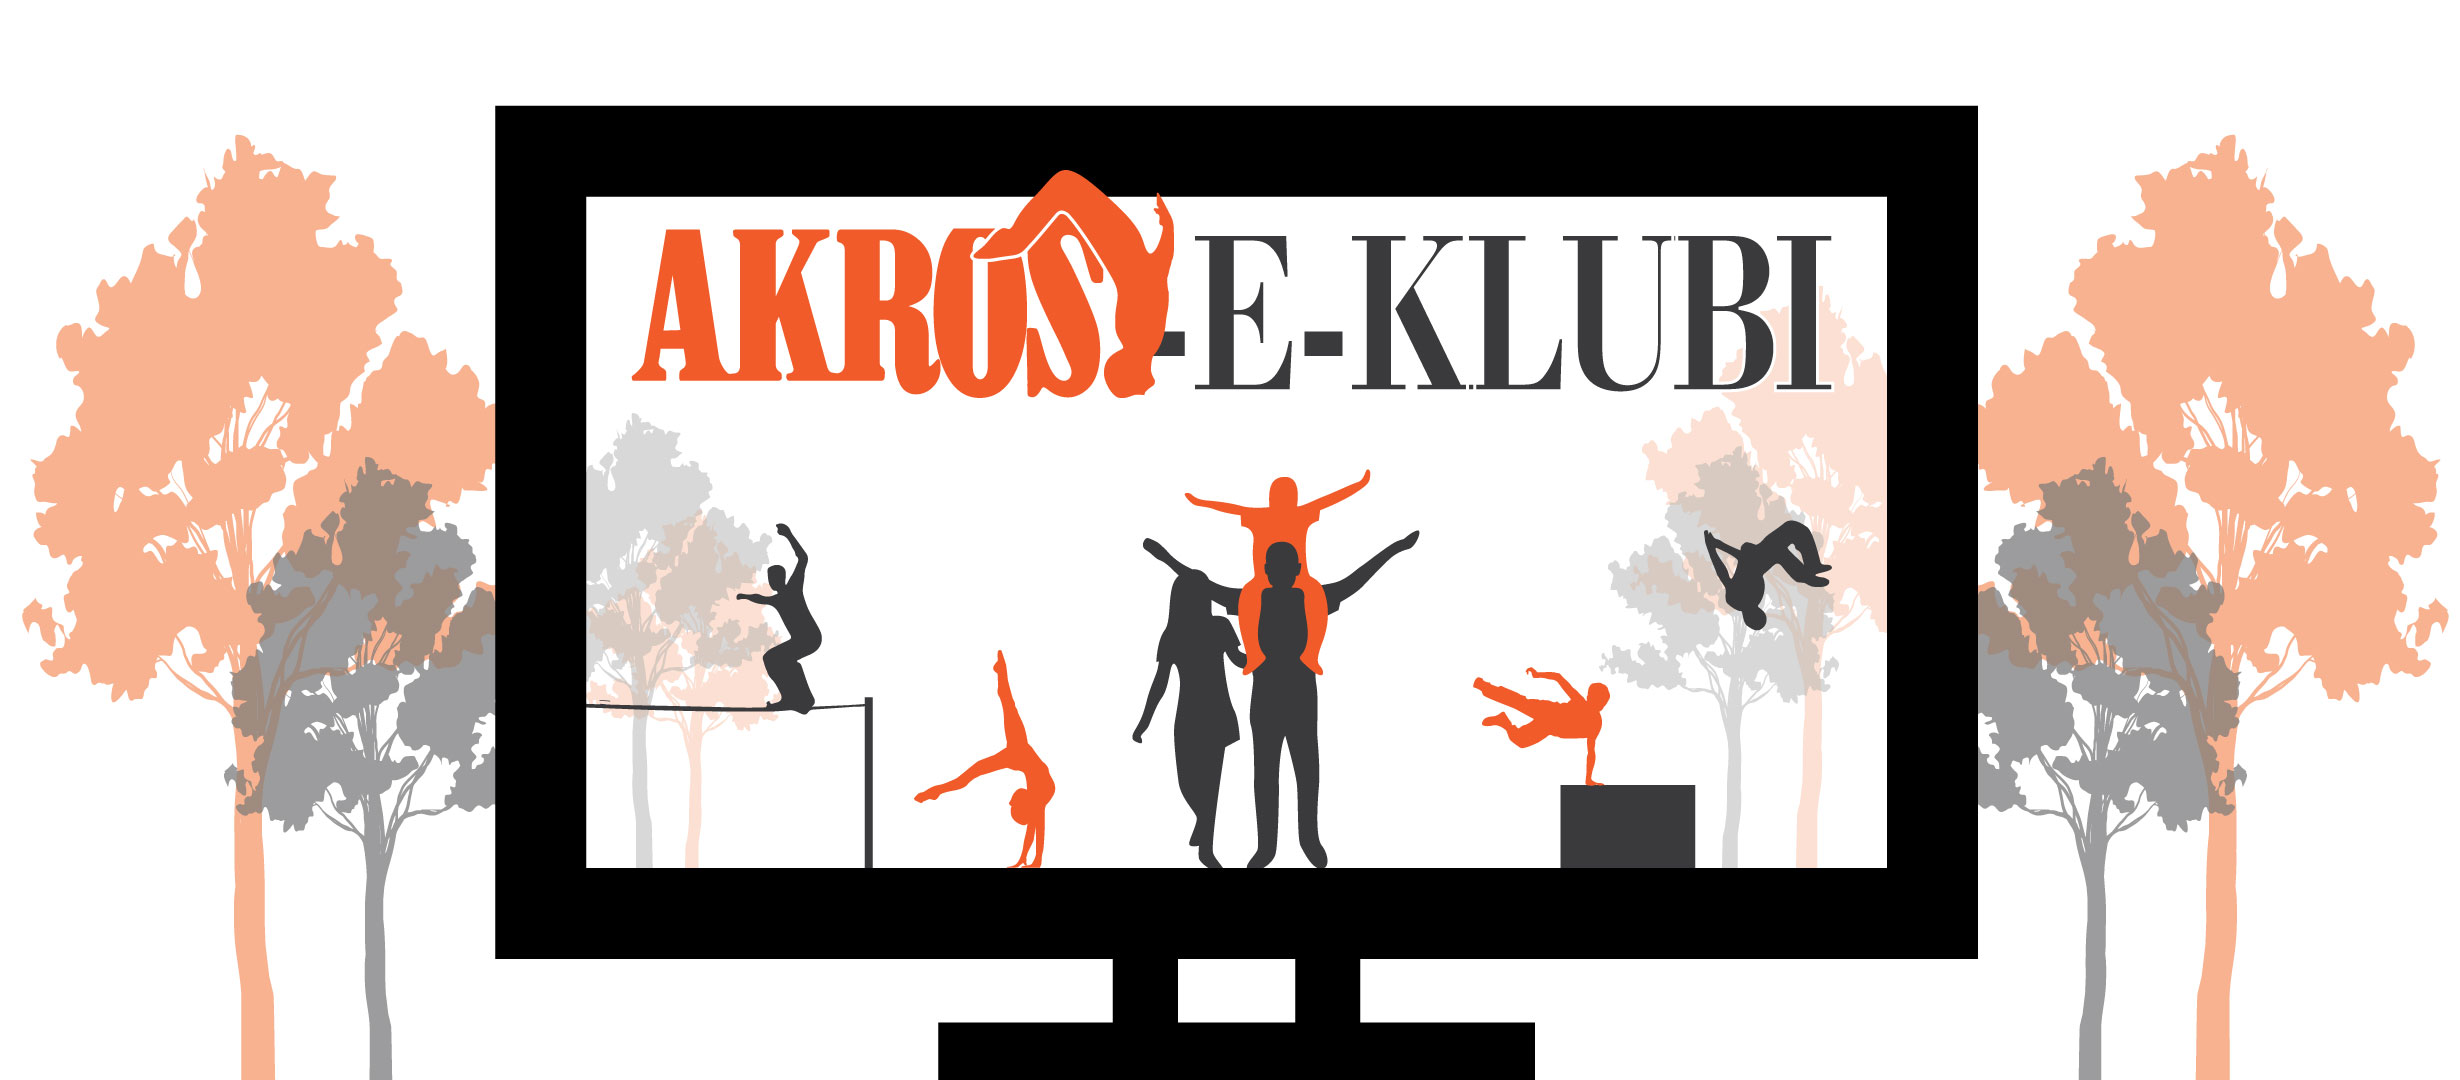 Akros-e-klubi-facebooki-cover2021